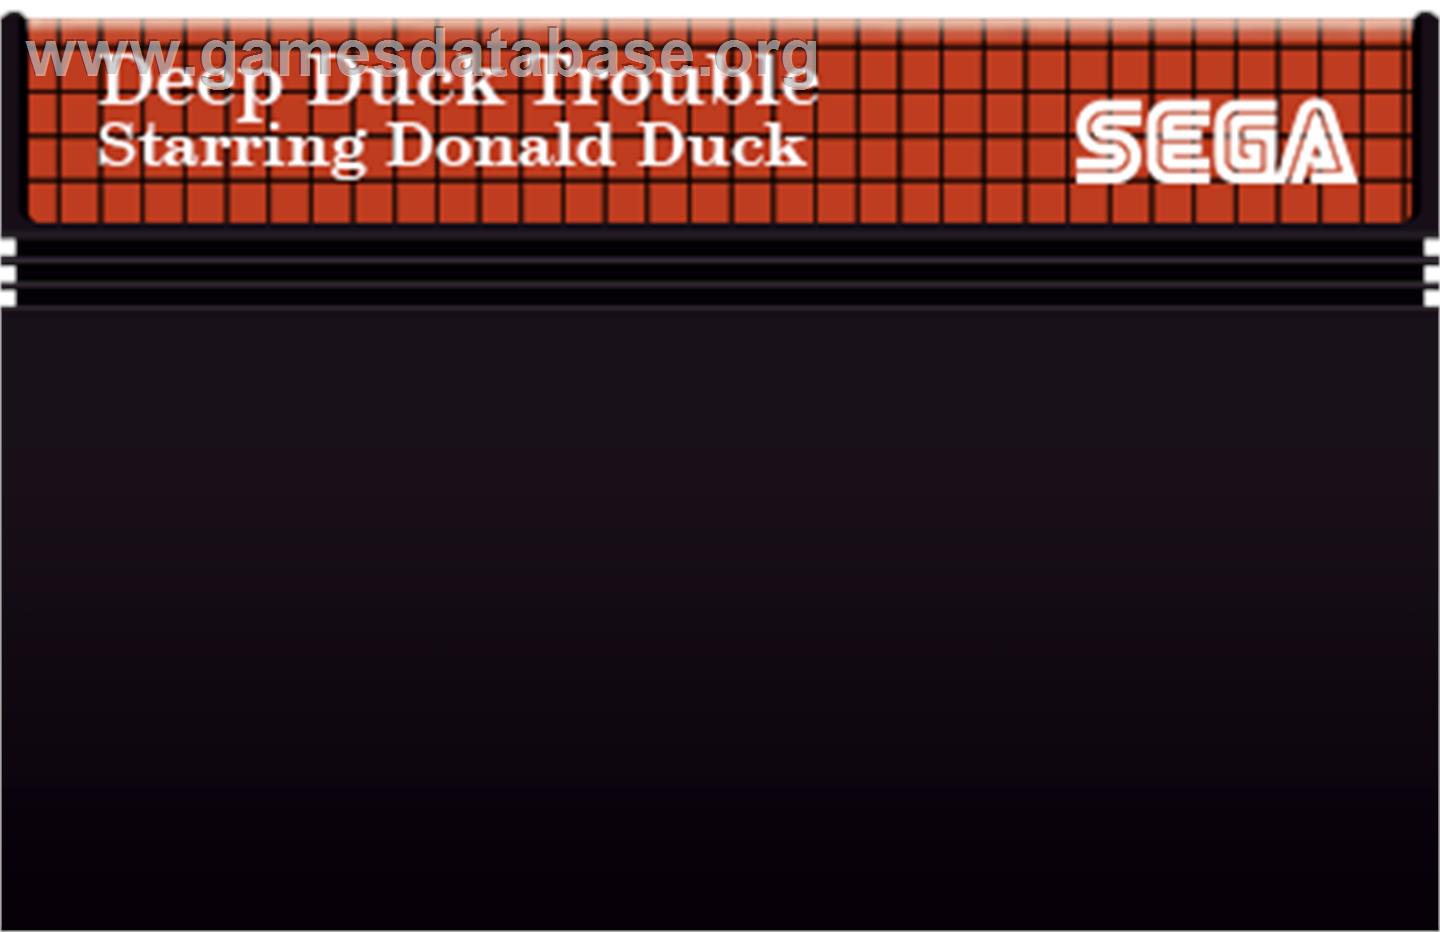 Deep Duck Trouble starring Donald Duck - Sega Master System - Artwork - Cartridge